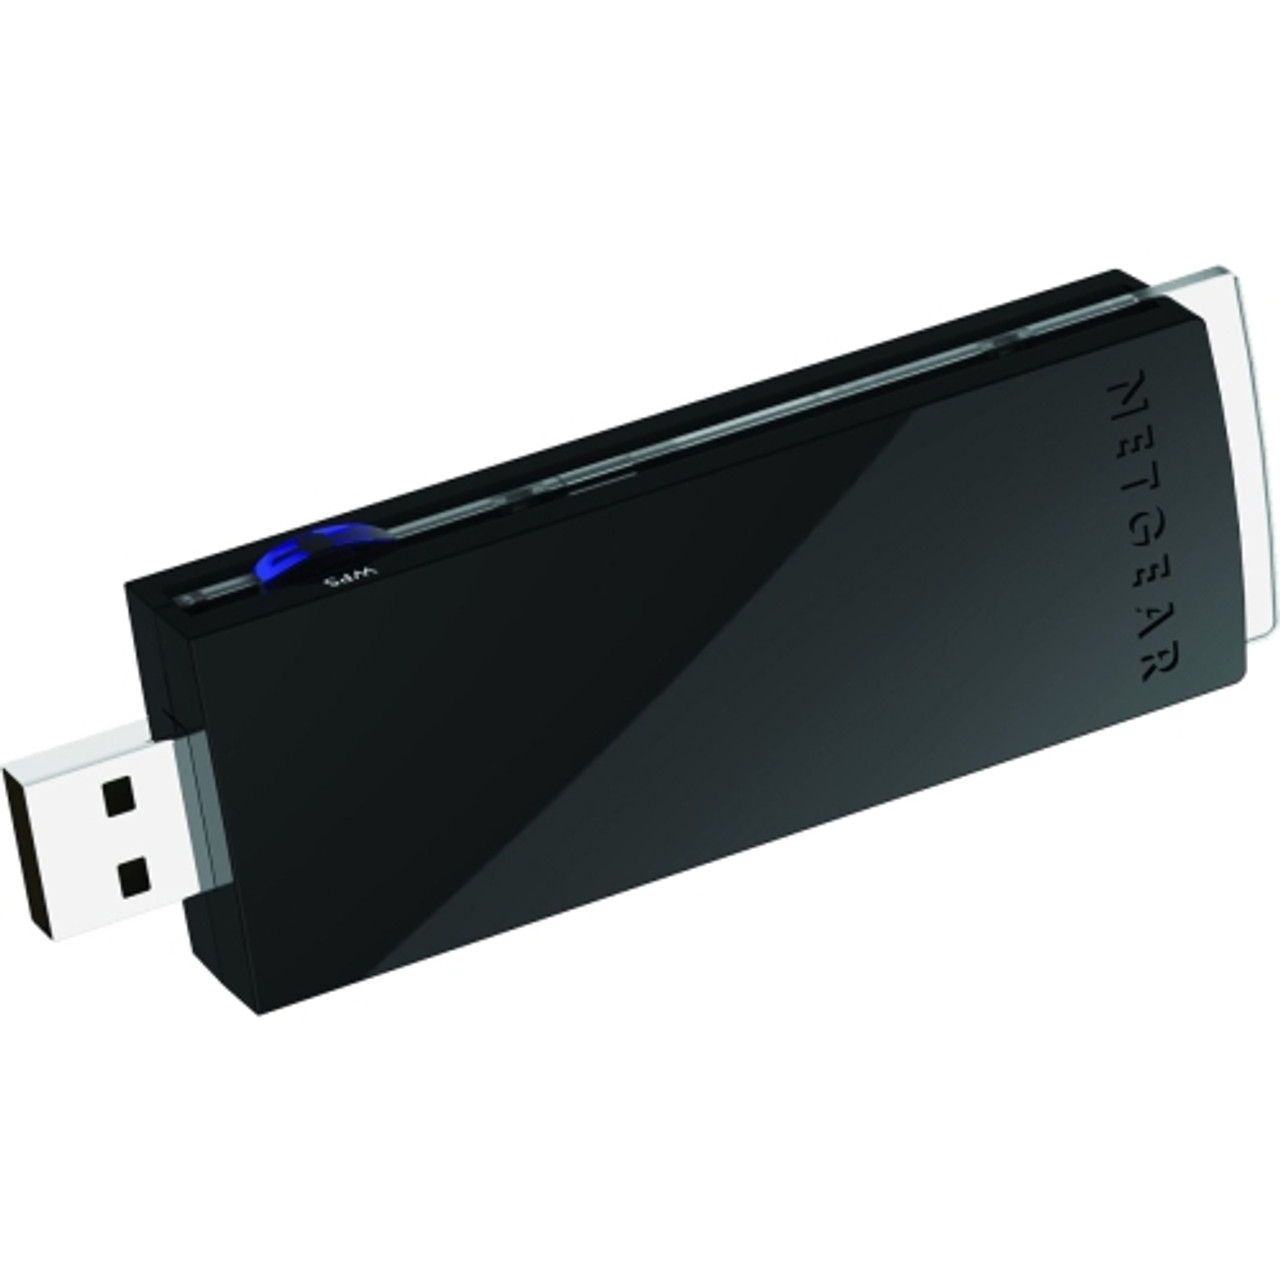 WNDA4100 NetGear N900 Wireless Dual Band USB Adapter Hi-speed USB 450 MBps 2.4 5GHz